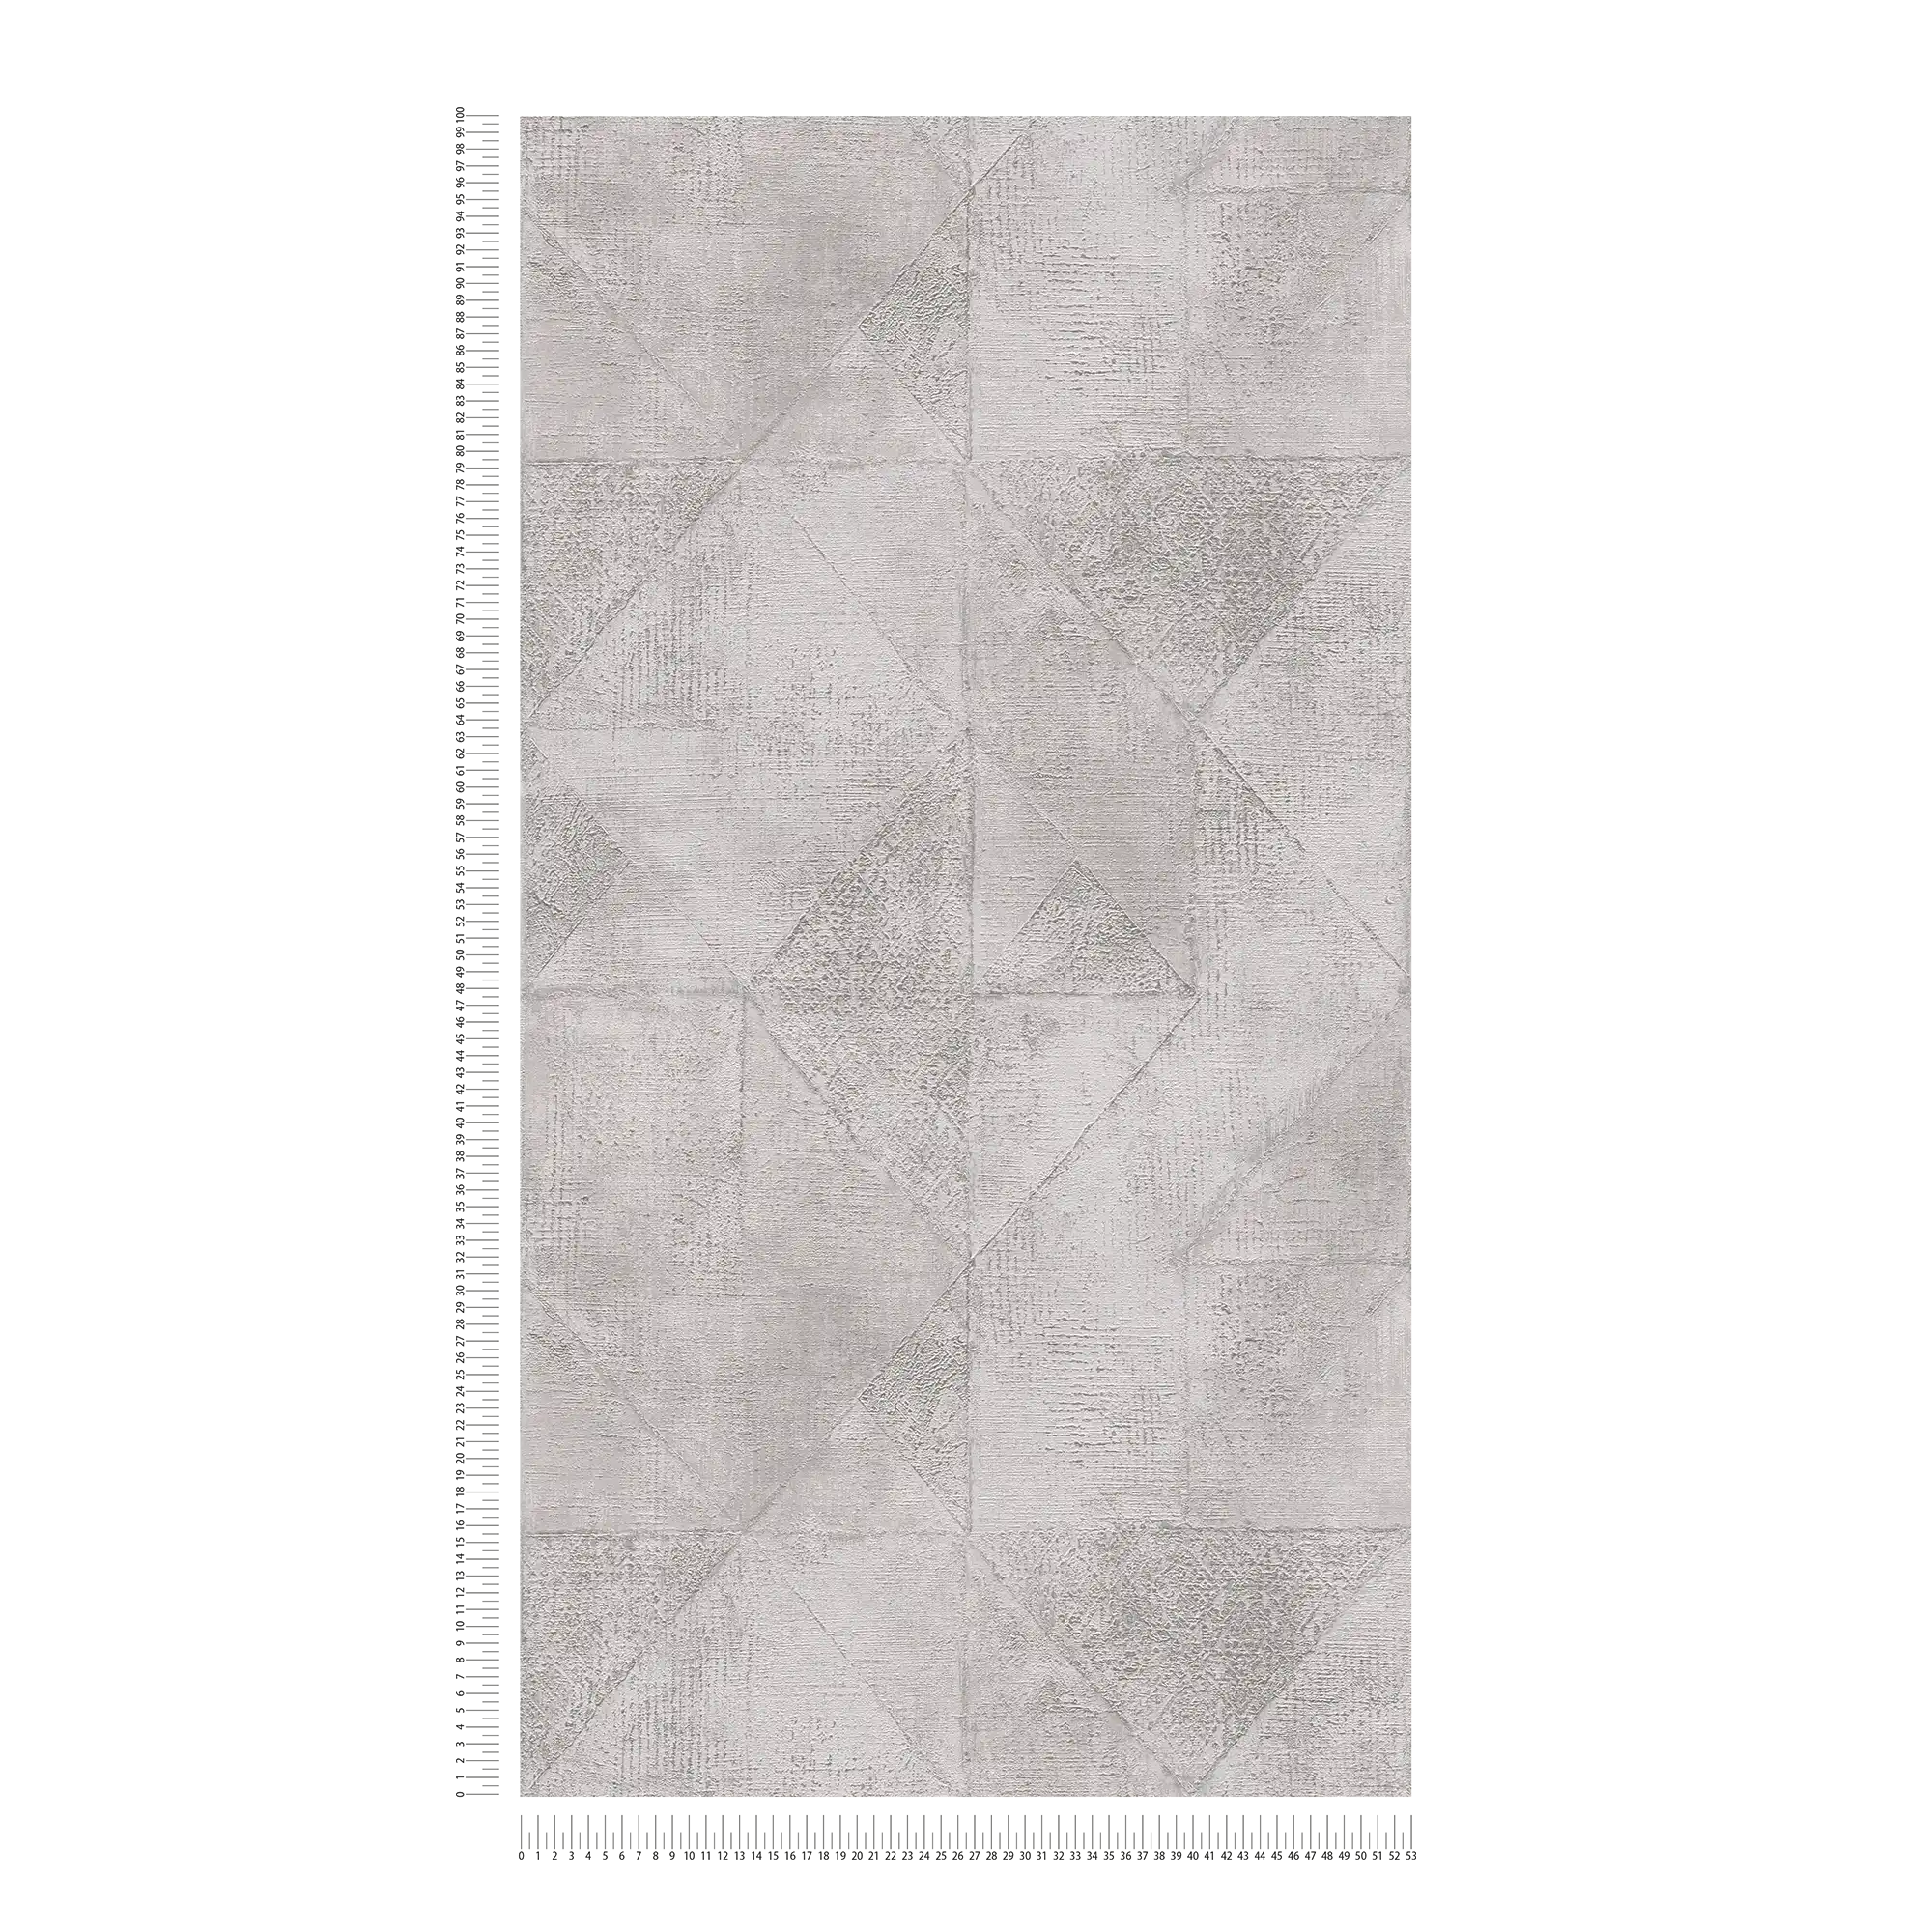             Papel pintado con motivo gráfico triangular textura metalizada brillante - gris, plata
        